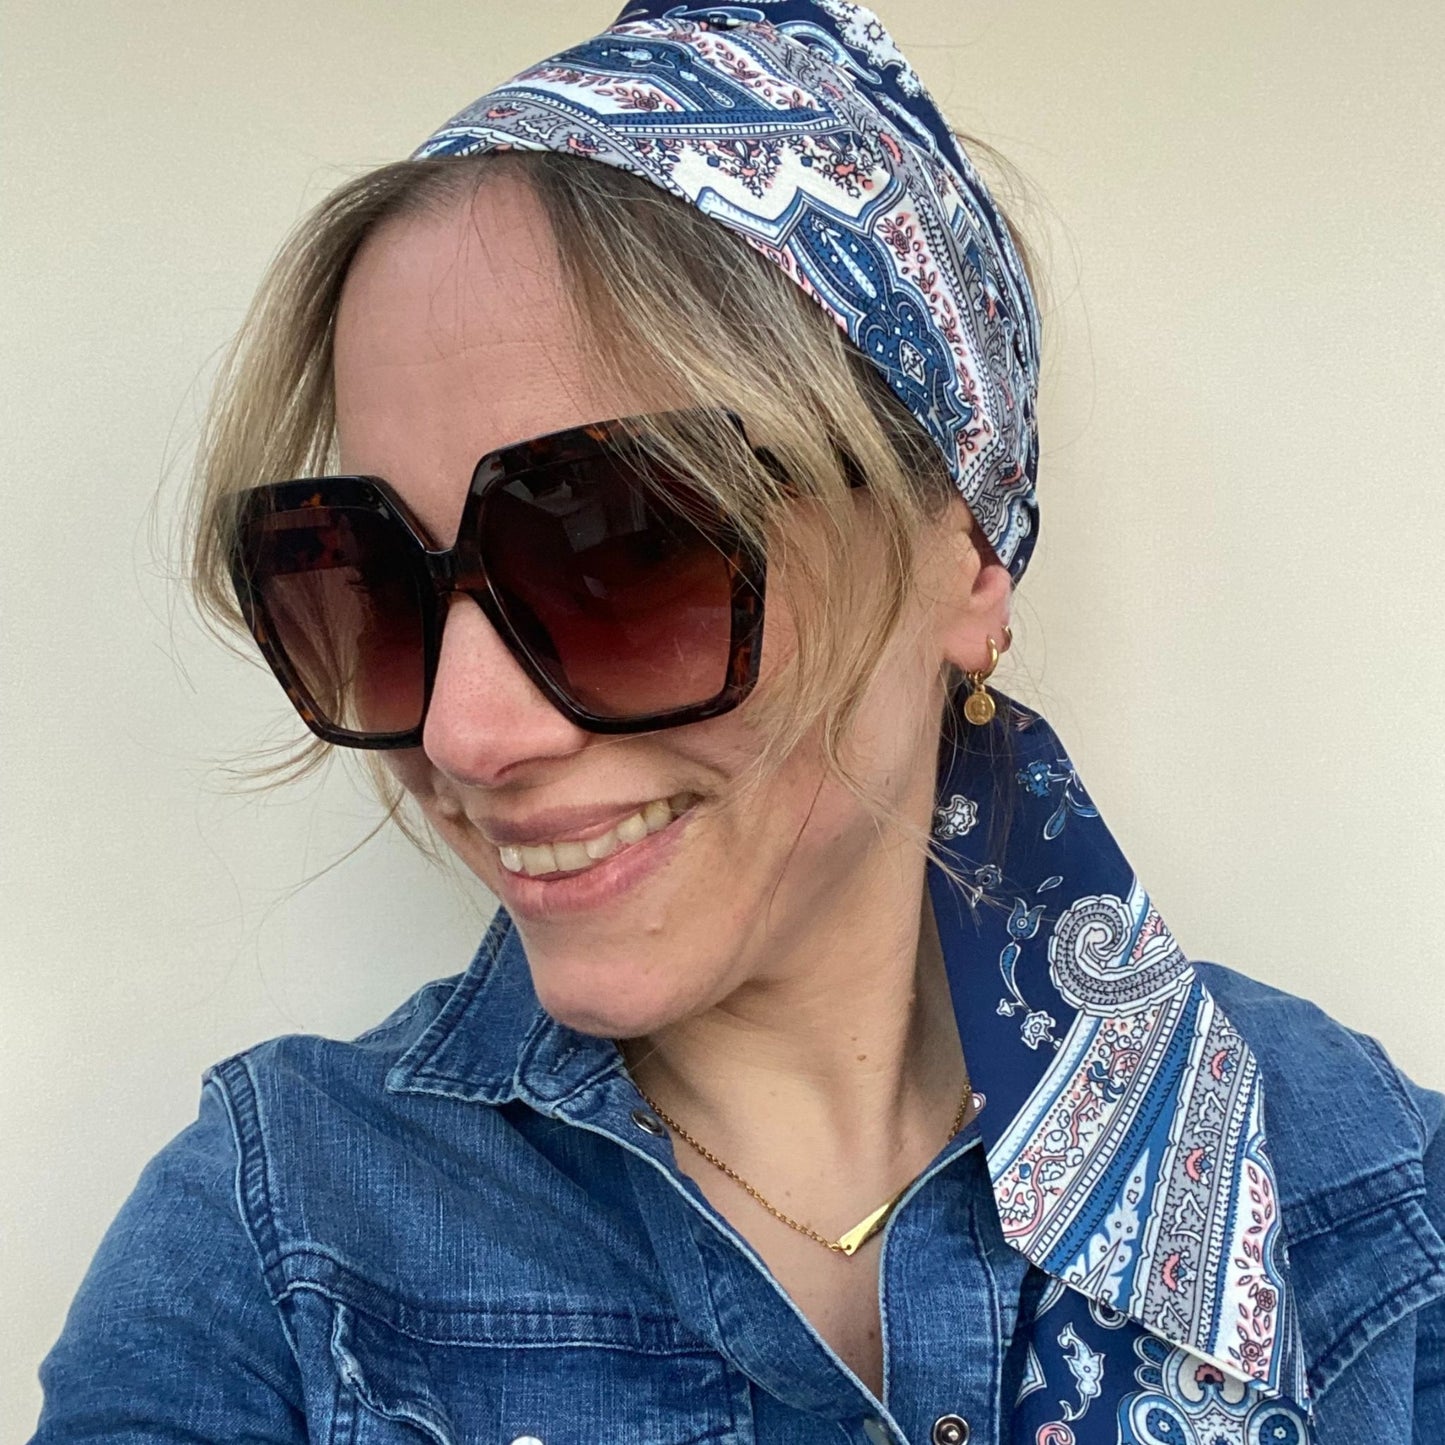 lady wearing paisley headscarf and sunglasses